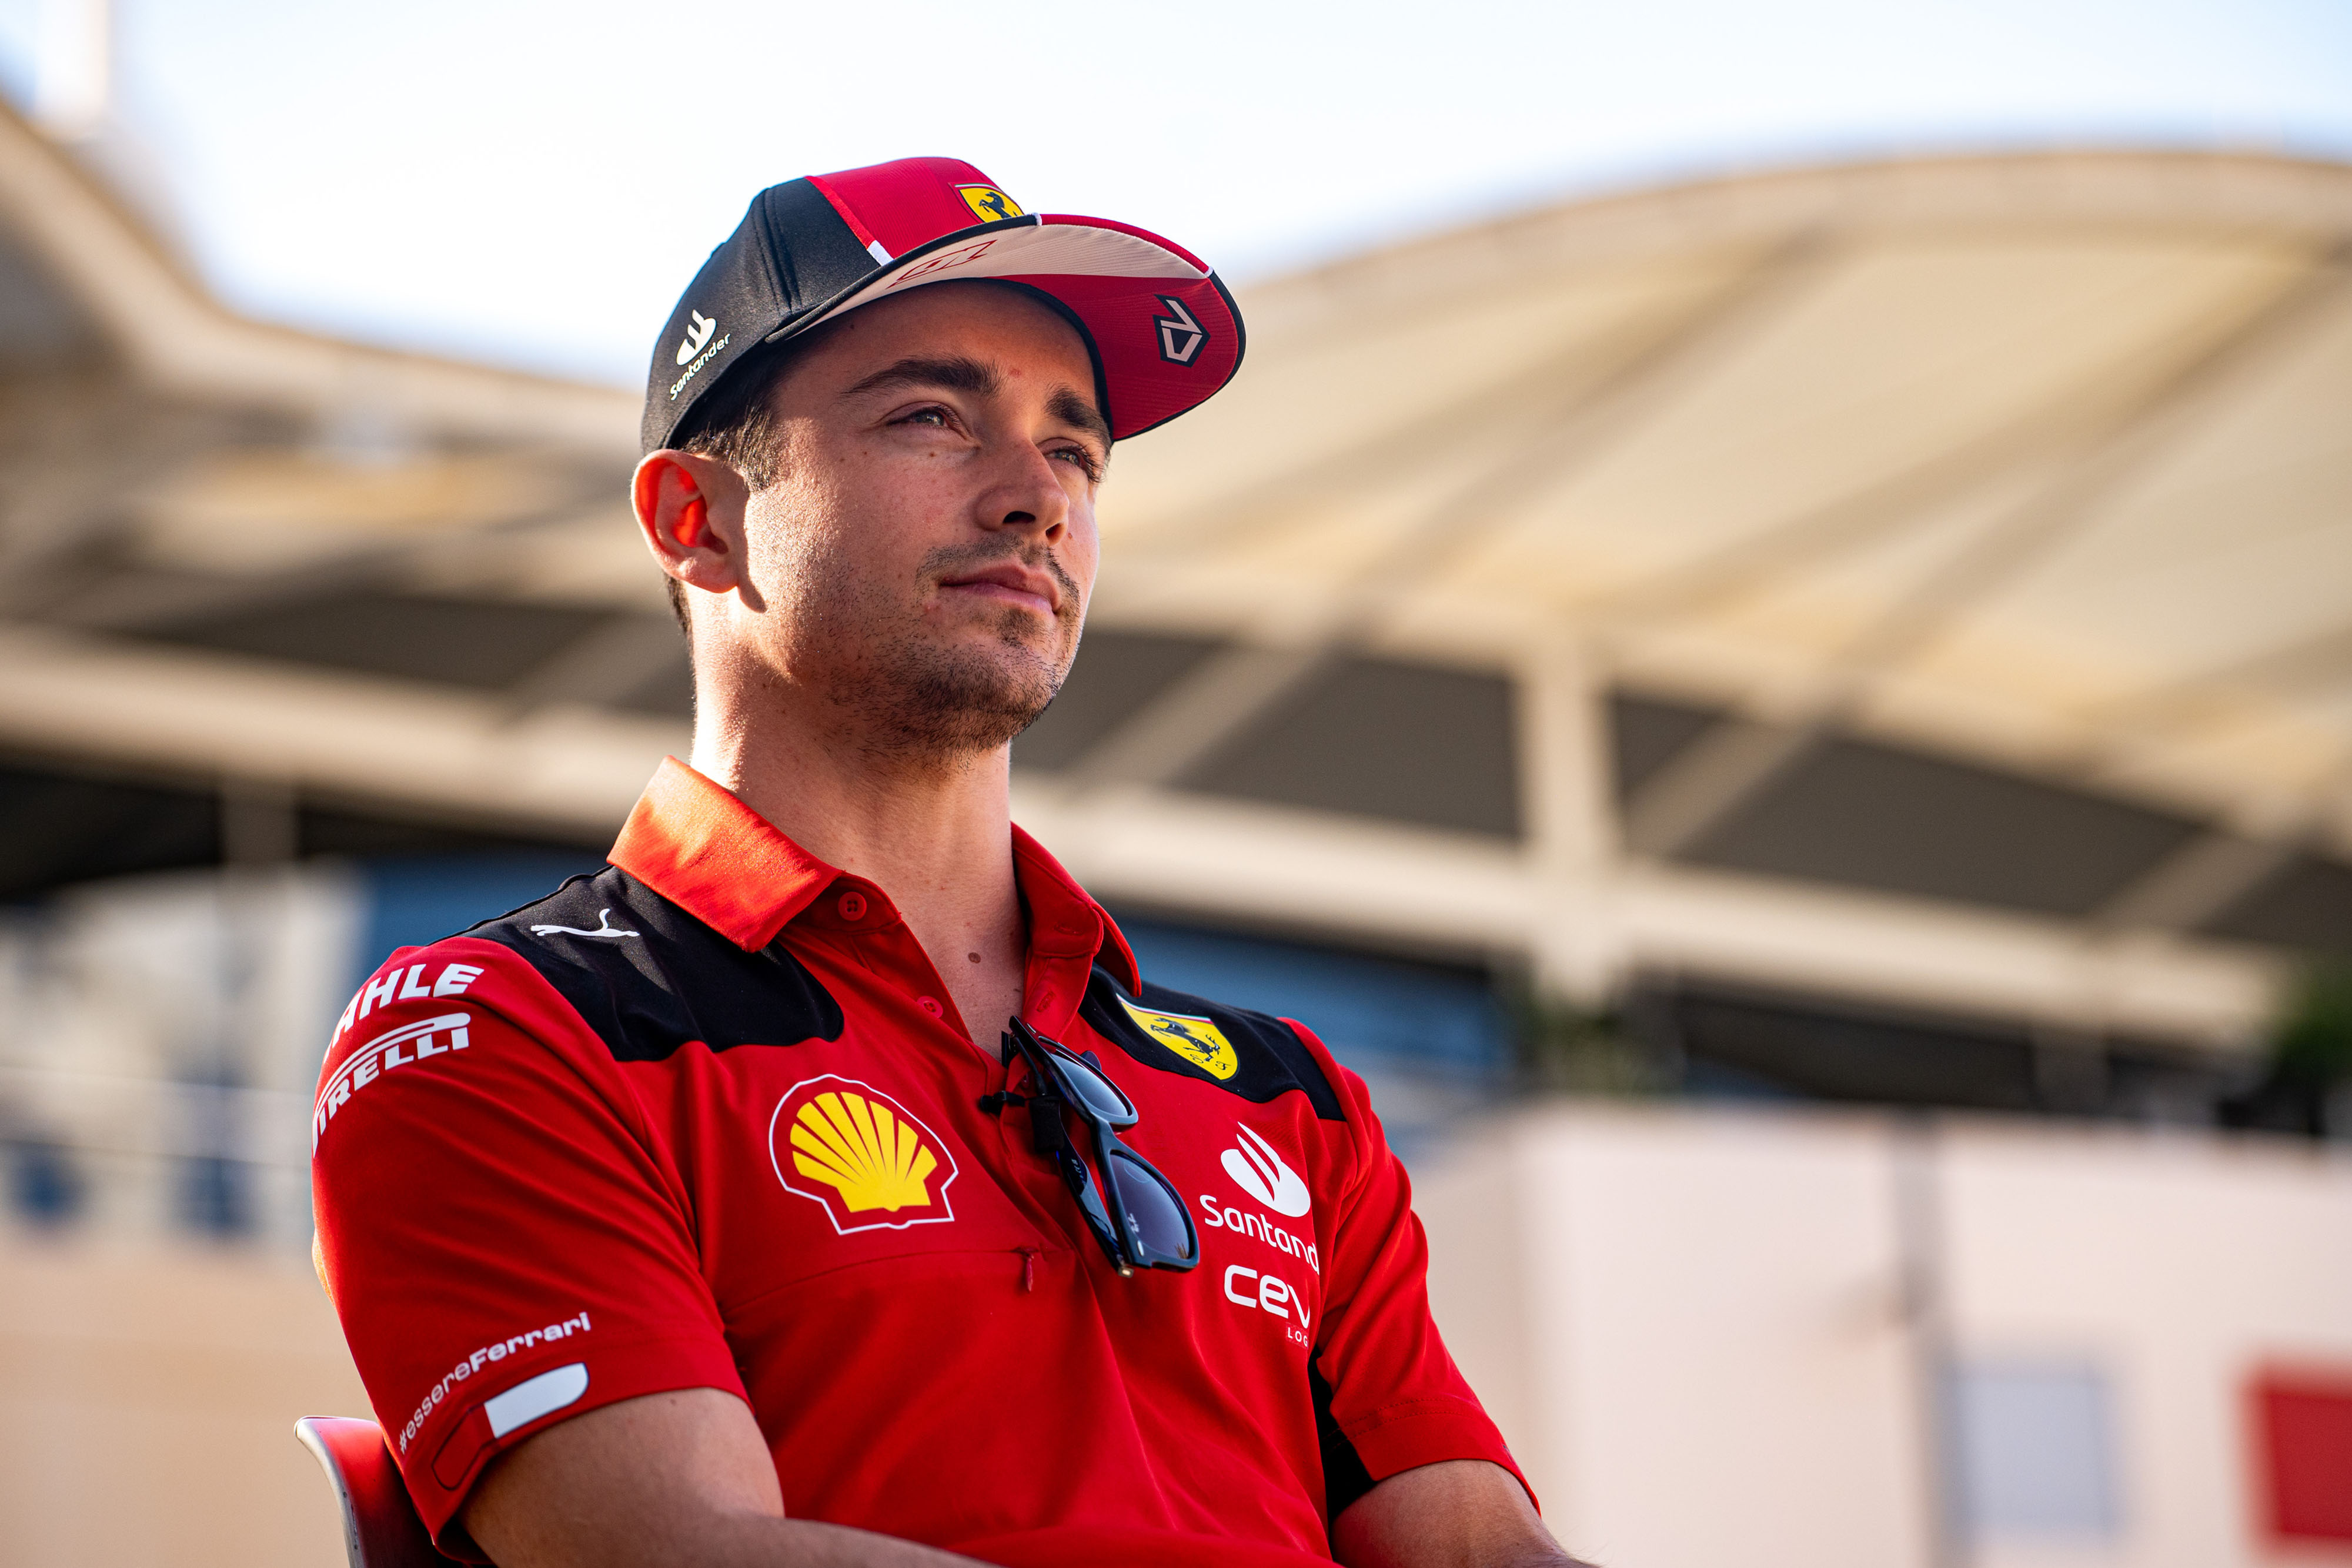 Vasseur skomentował ostatnie gorące tematy wokół Ferrari